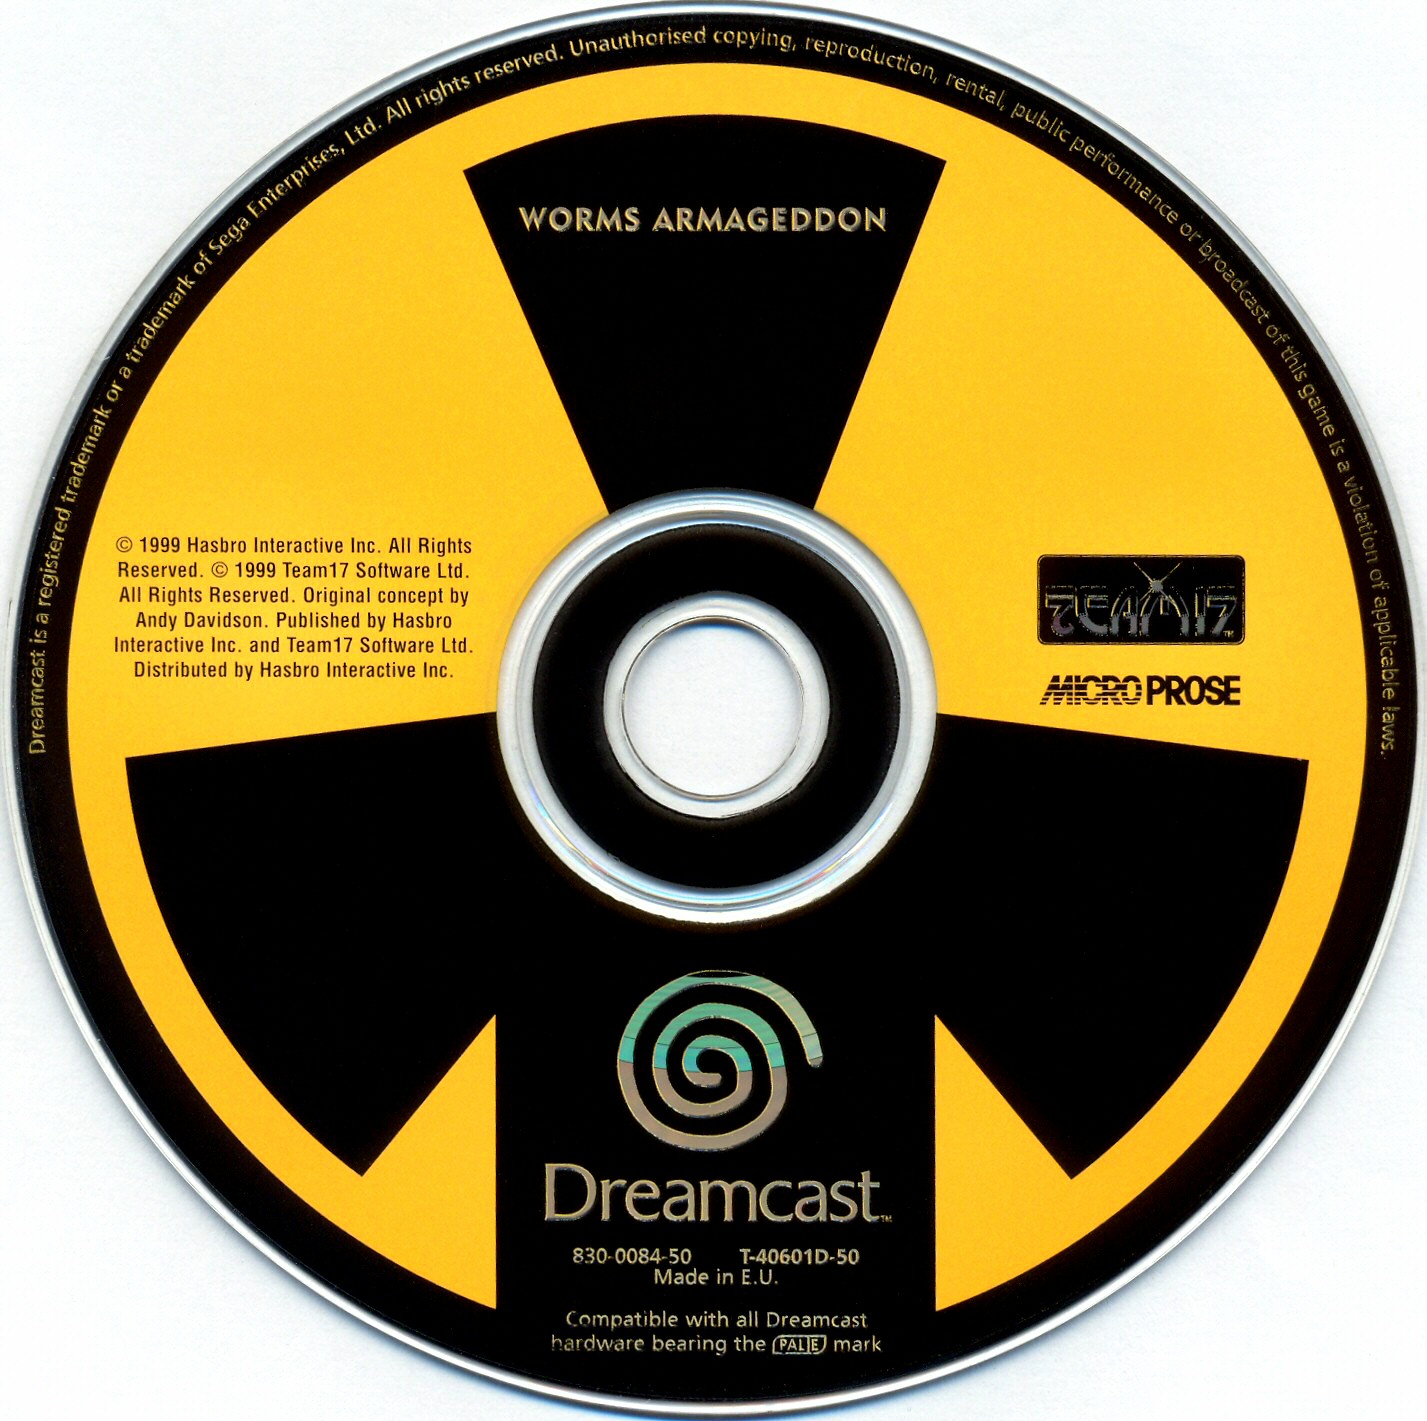 Würmer Armageddon Windows 7 kein CD-Patch